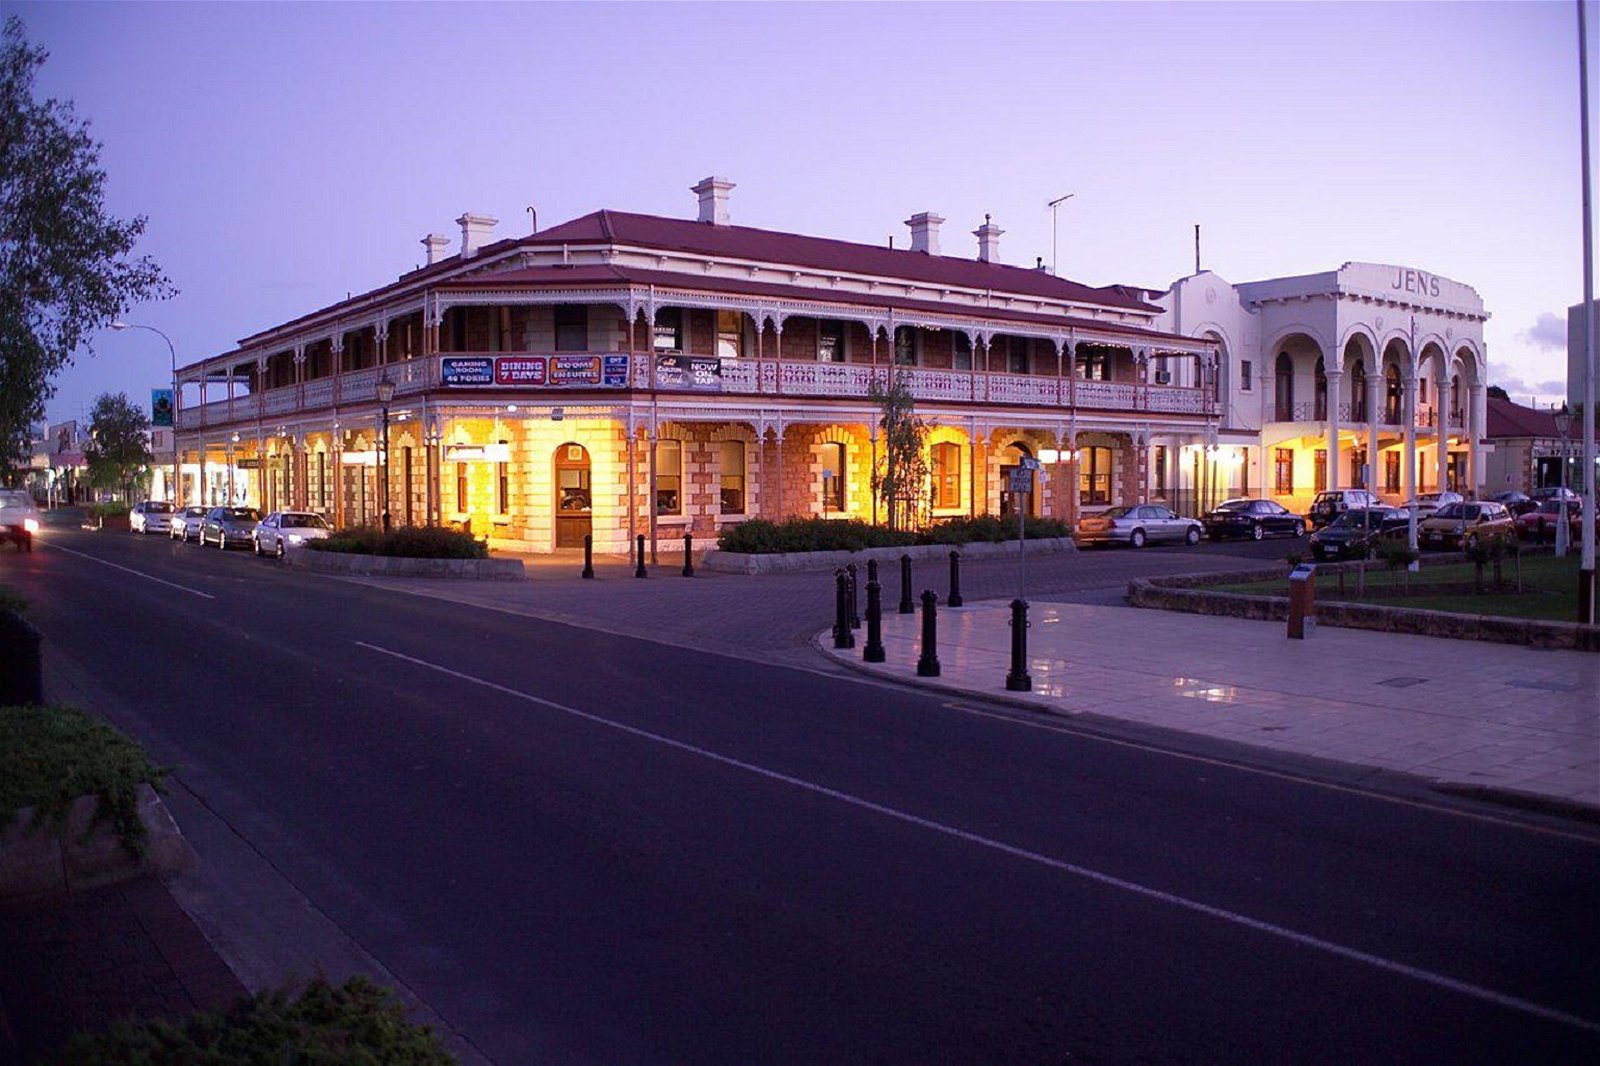 Jens Town Hall Hotel - Pubs Sydney